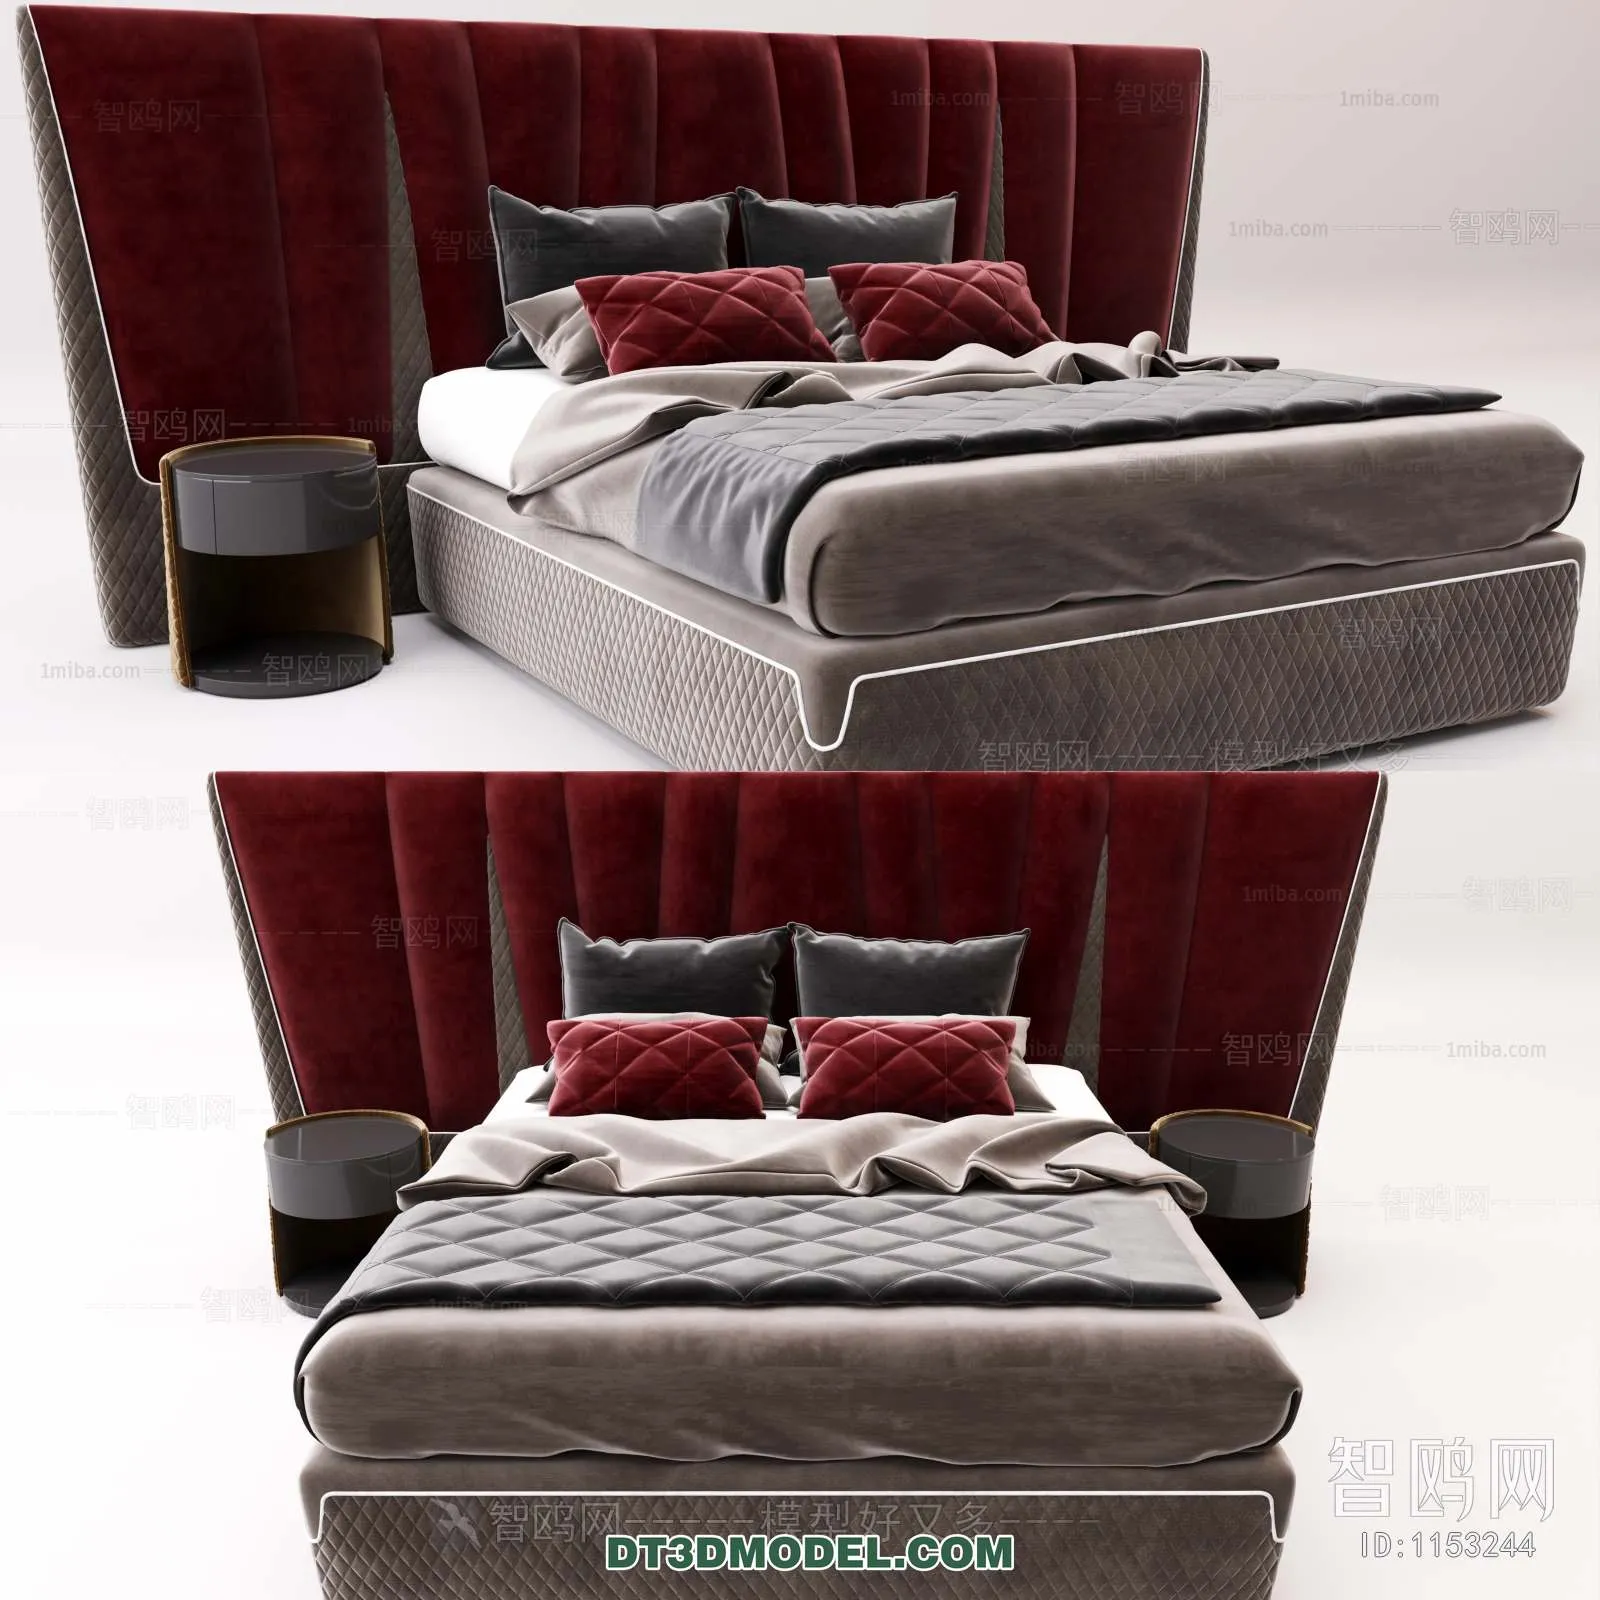 Double Bed 3D Models – 0017